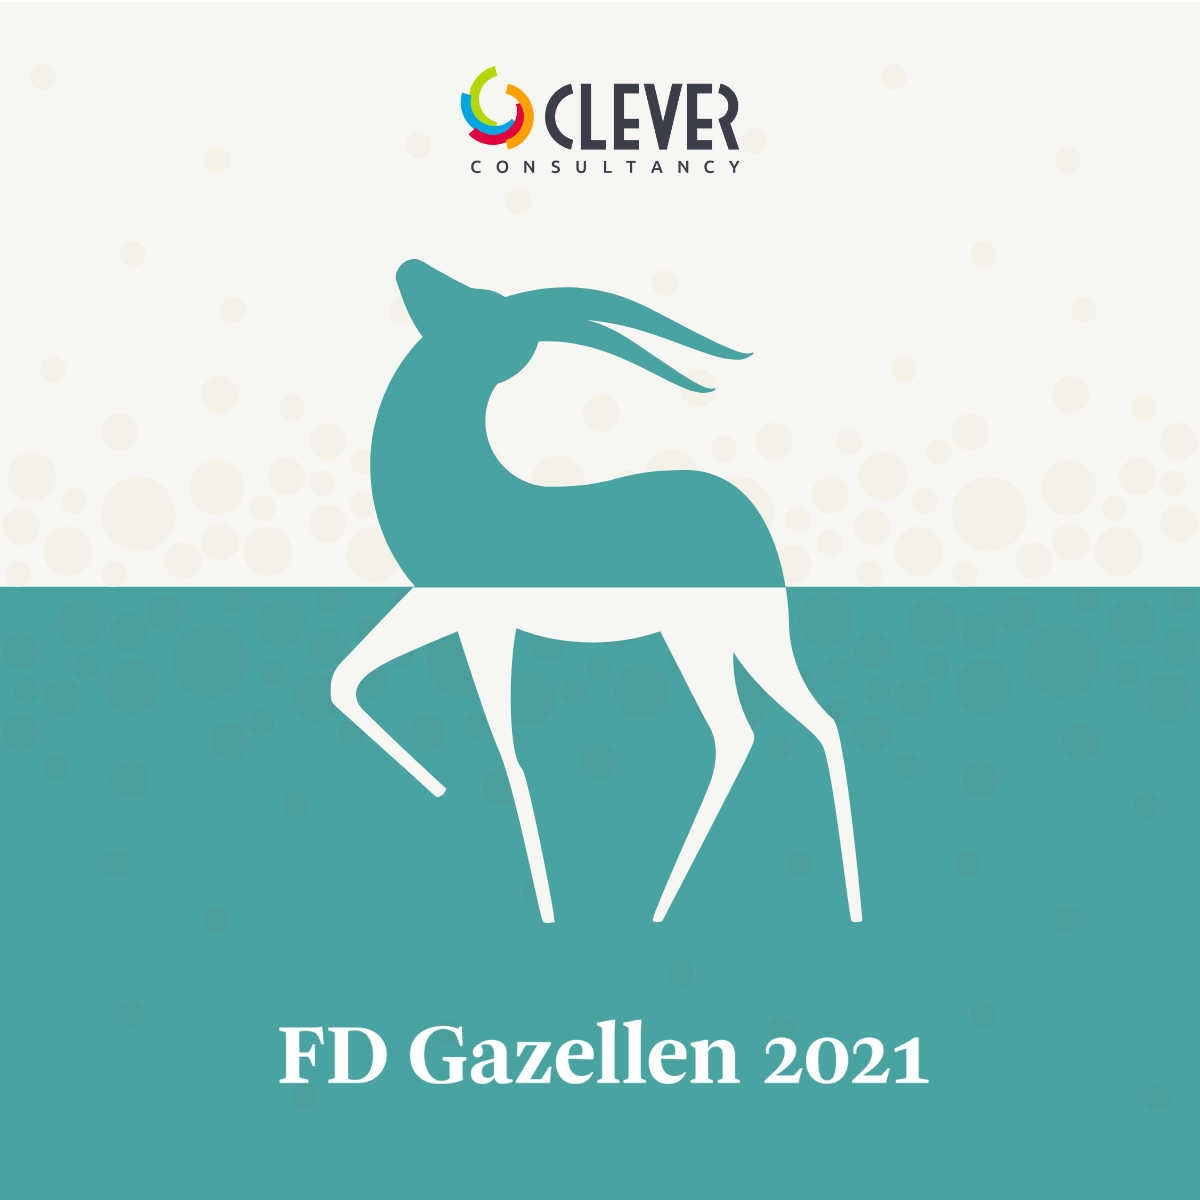 Clever Consultancy wint FD Gazelle 2021